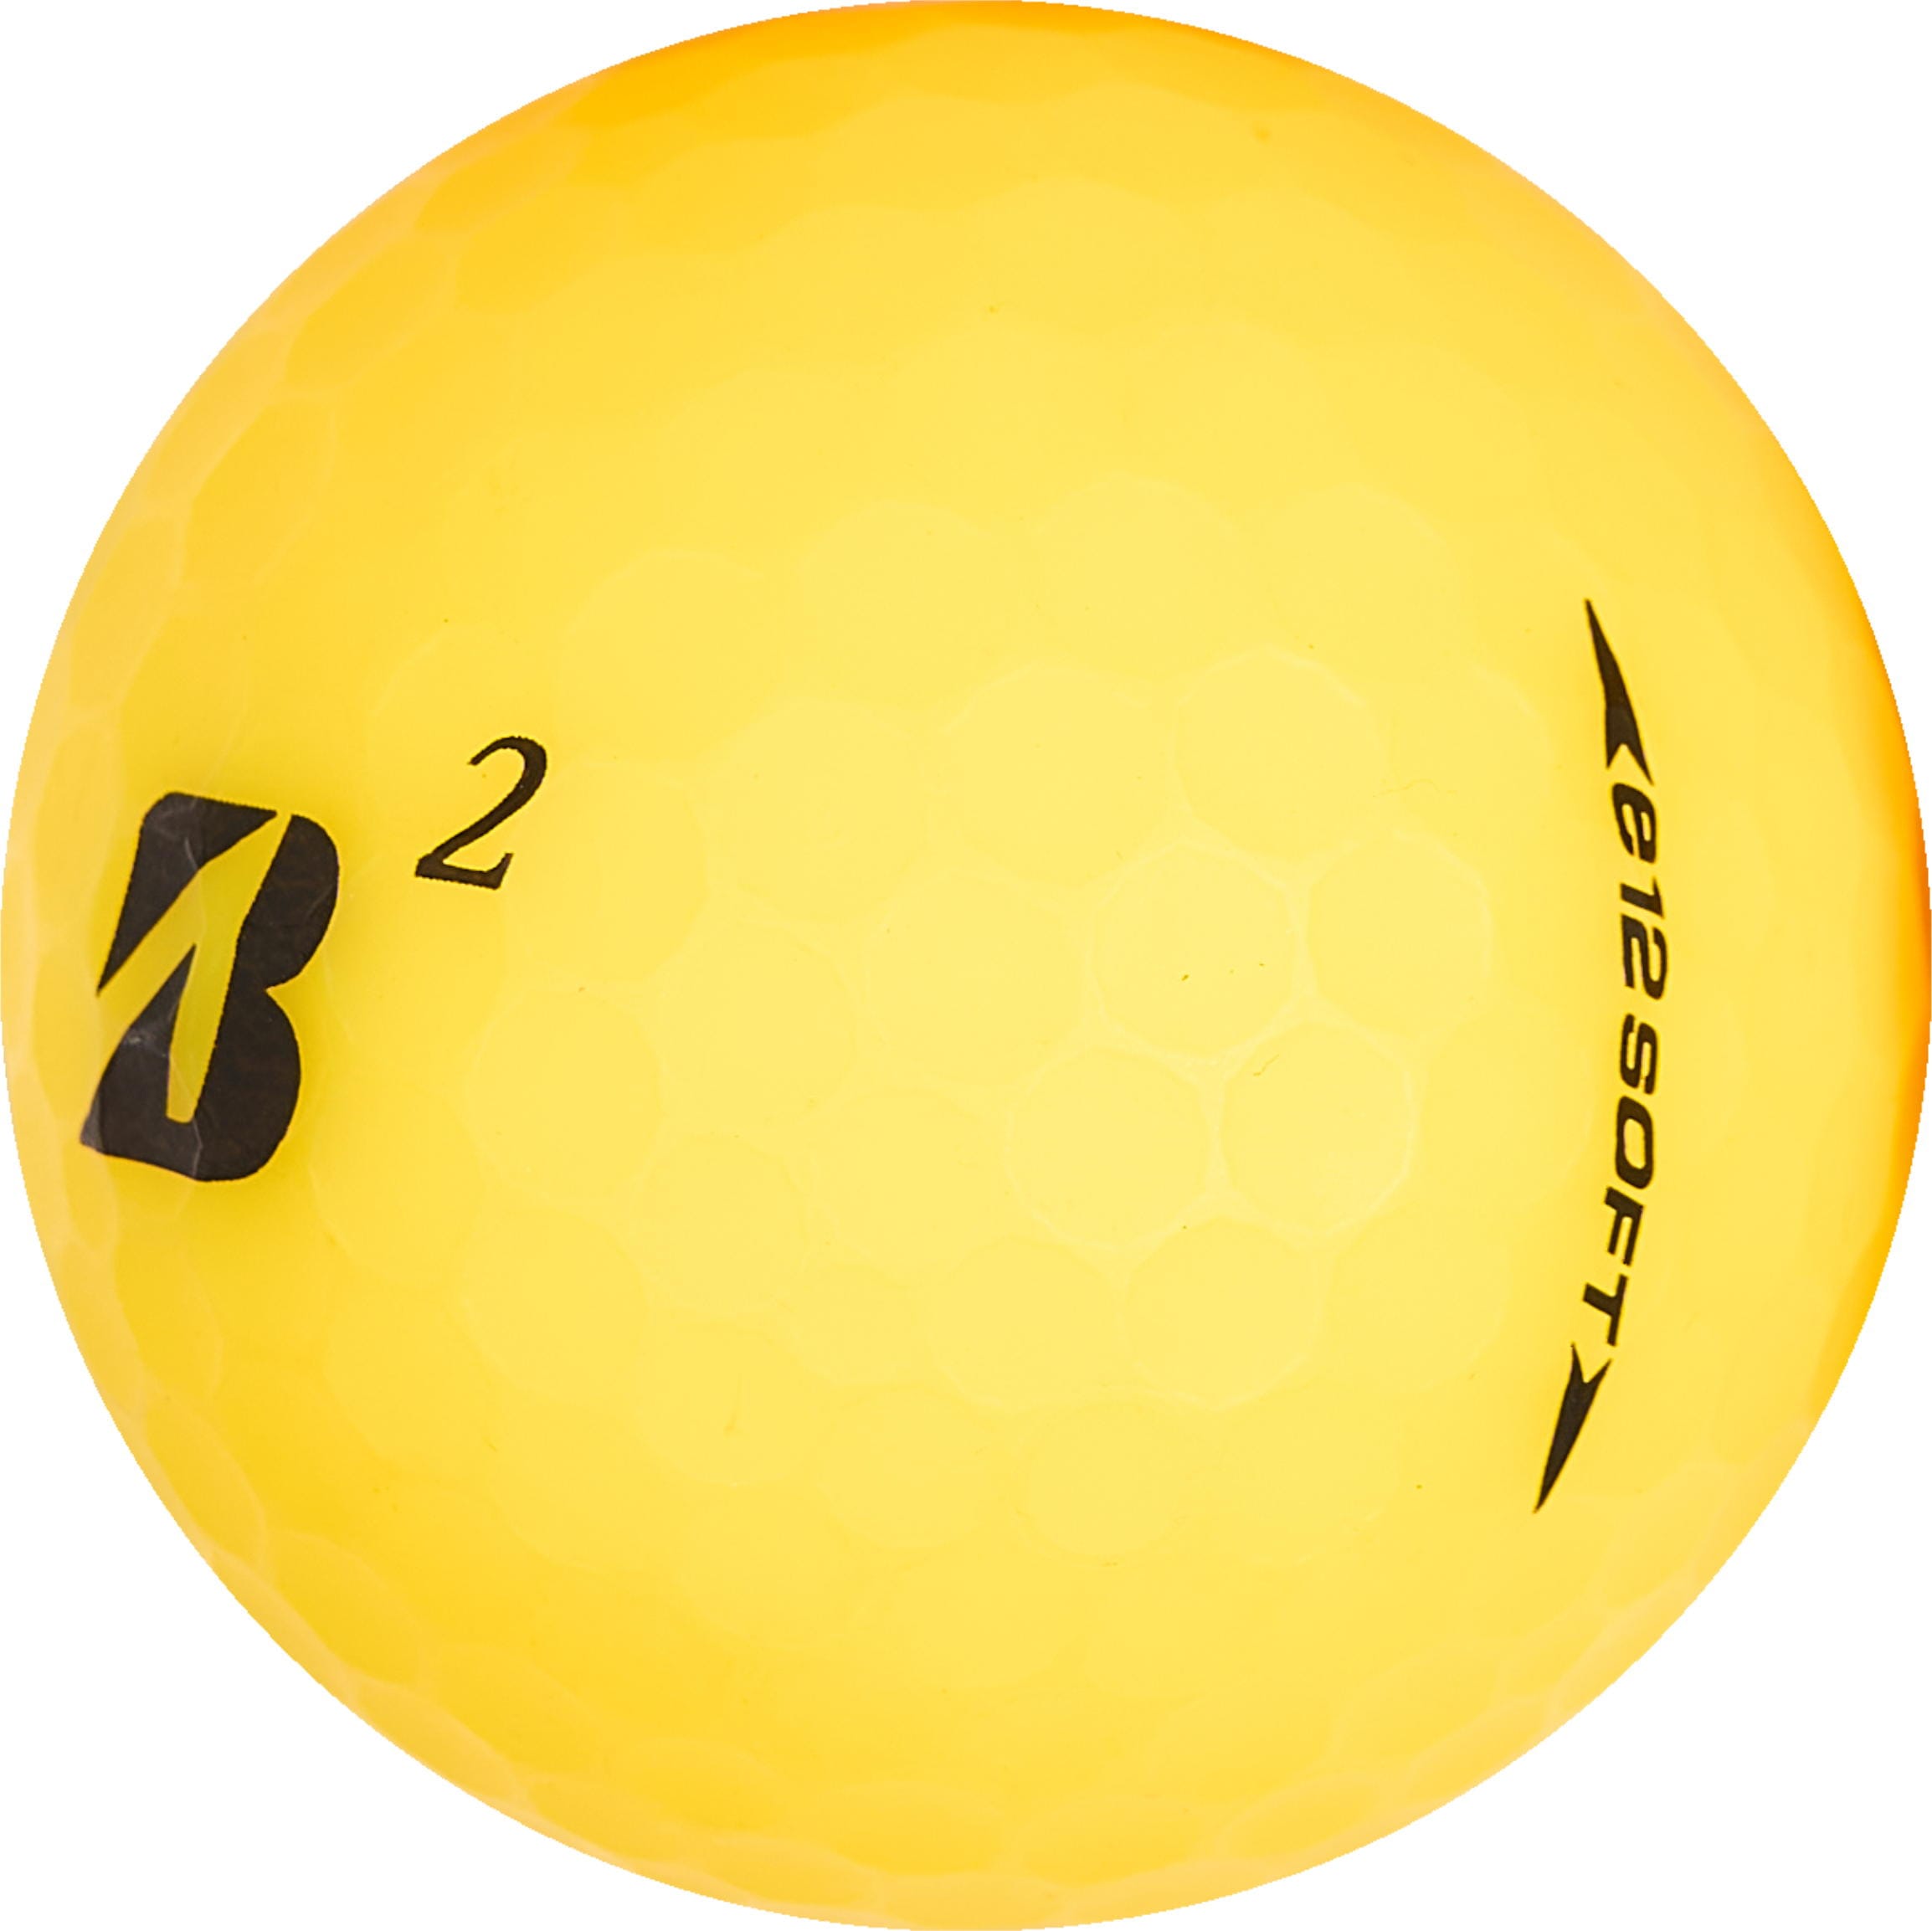 25 Bridgestone e12 SOFT Lakeballs, Yellow